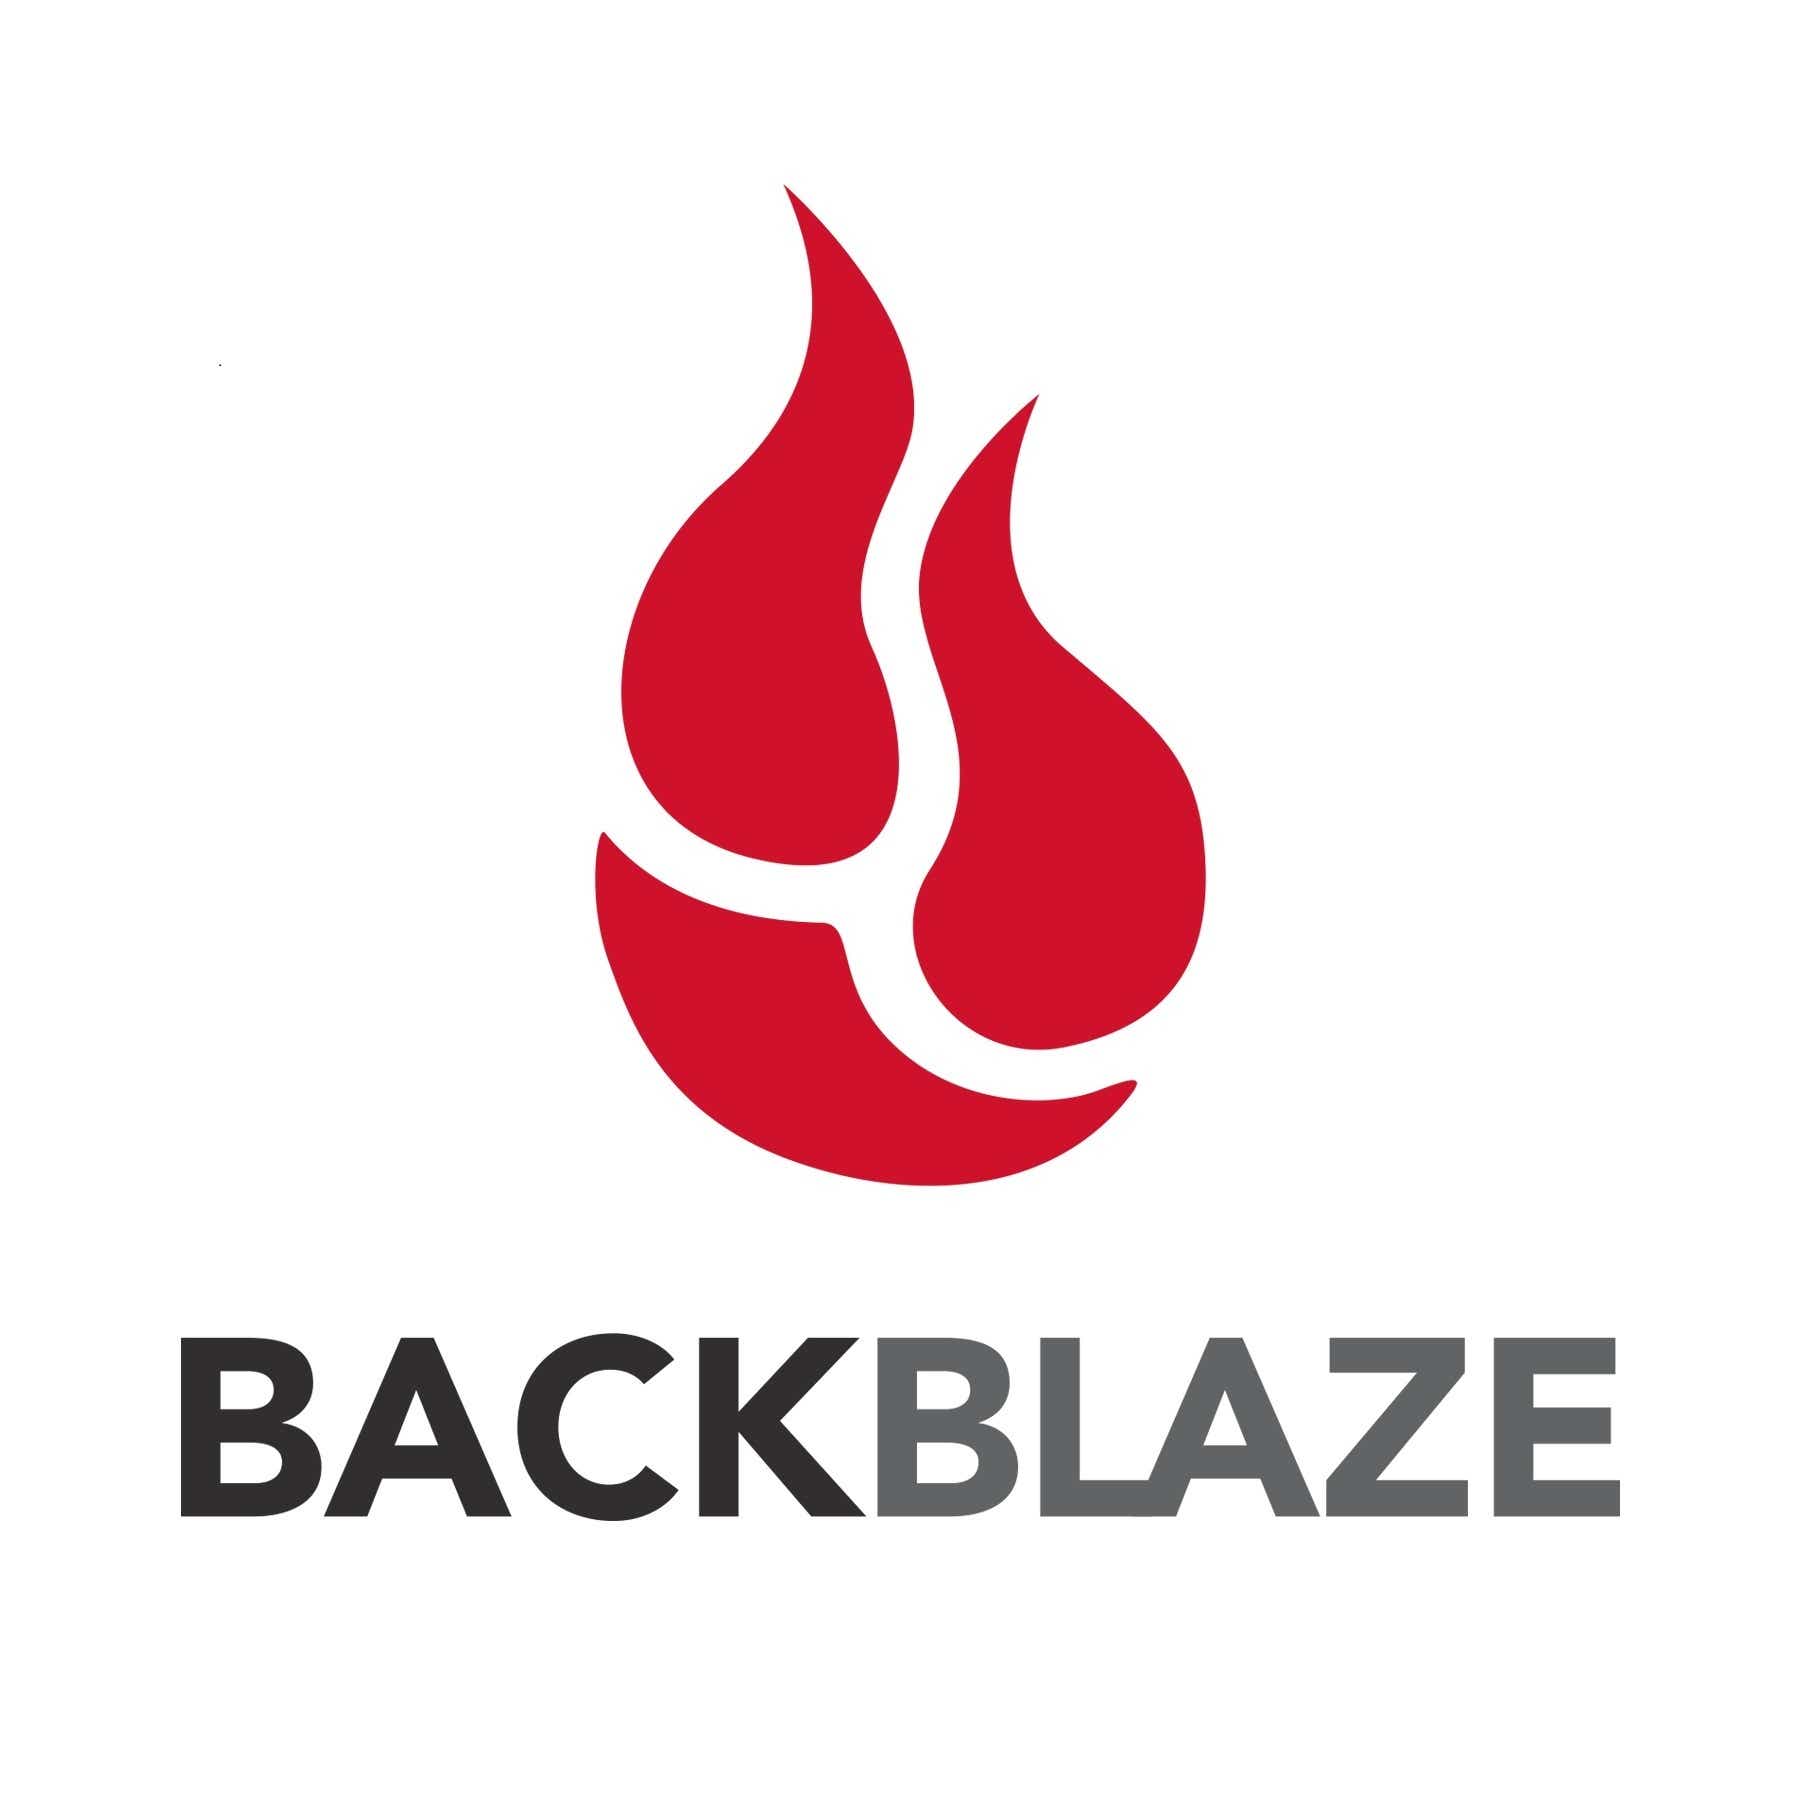 Backblaze - The Best Budget Option